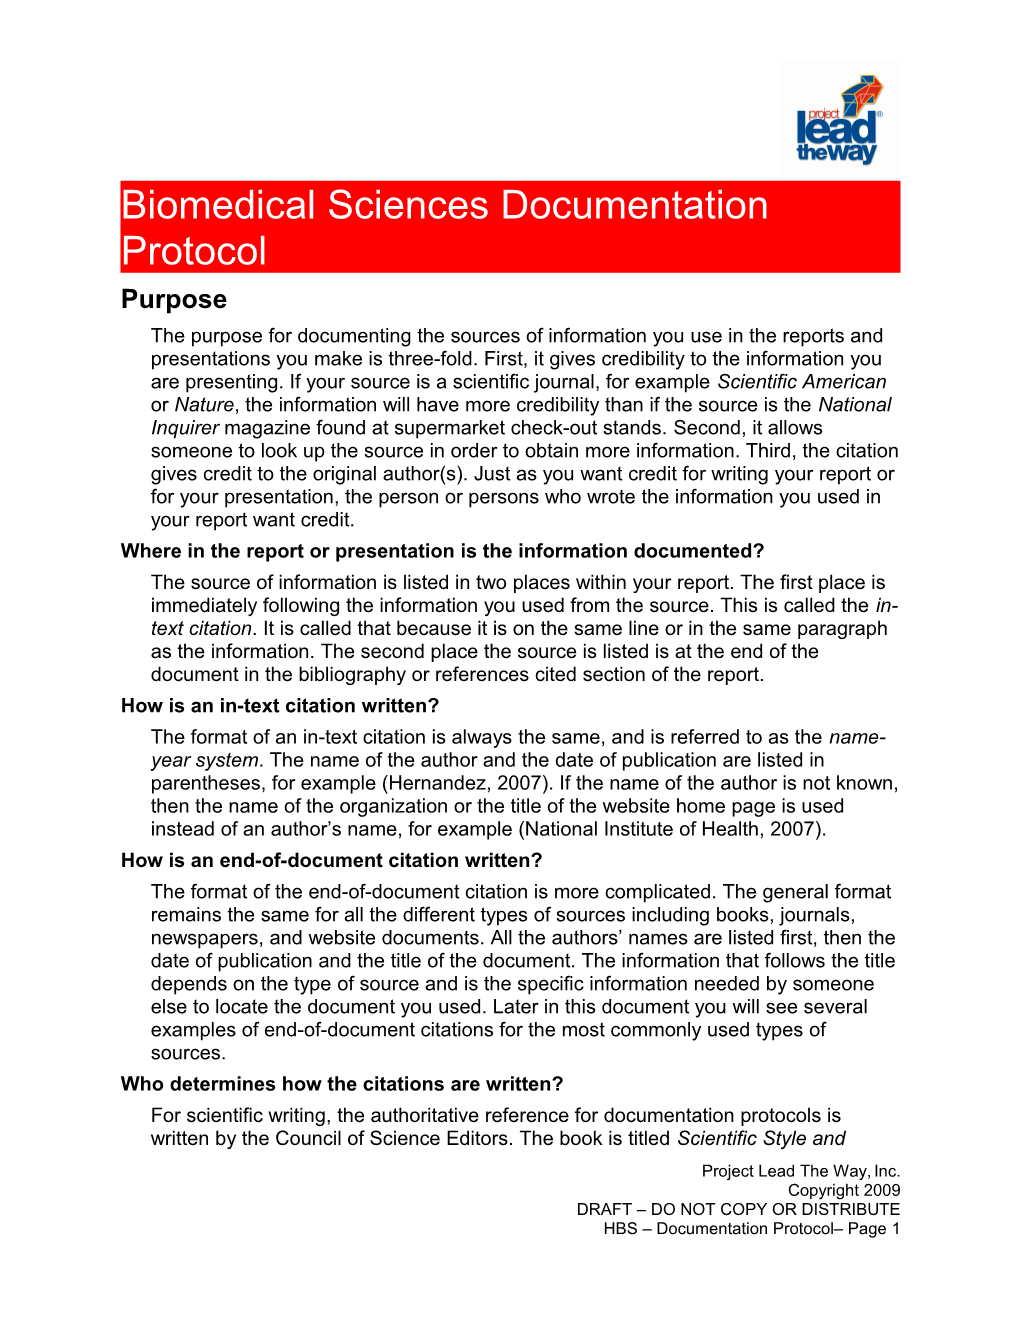 Biomedical Sciences Documentation Protocol